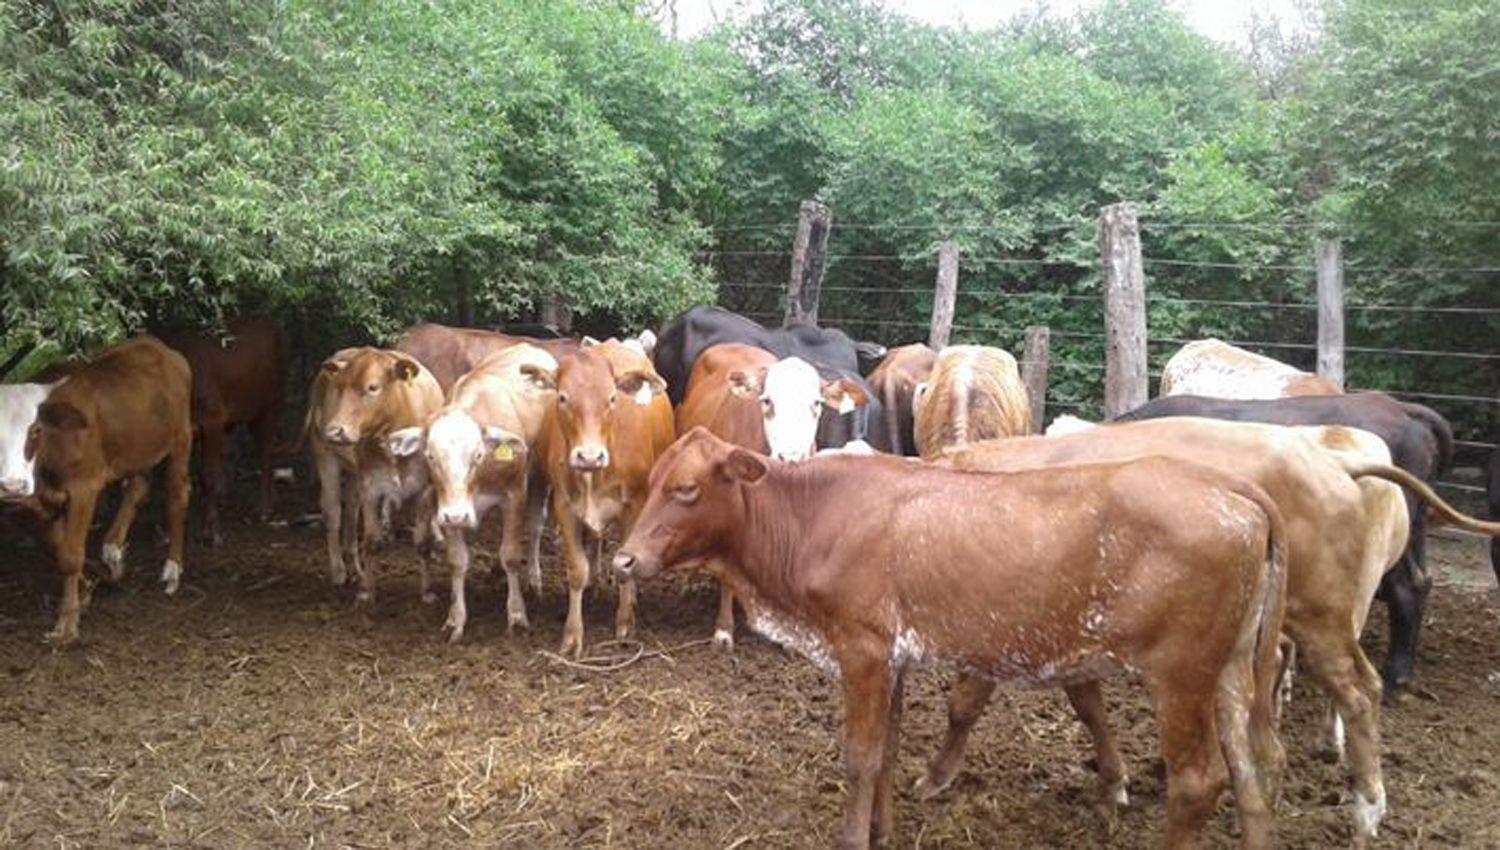 Se ampliacutea ldquobandardquo de abigeato tendriacutea un botiacuten de cinco millones en vacas